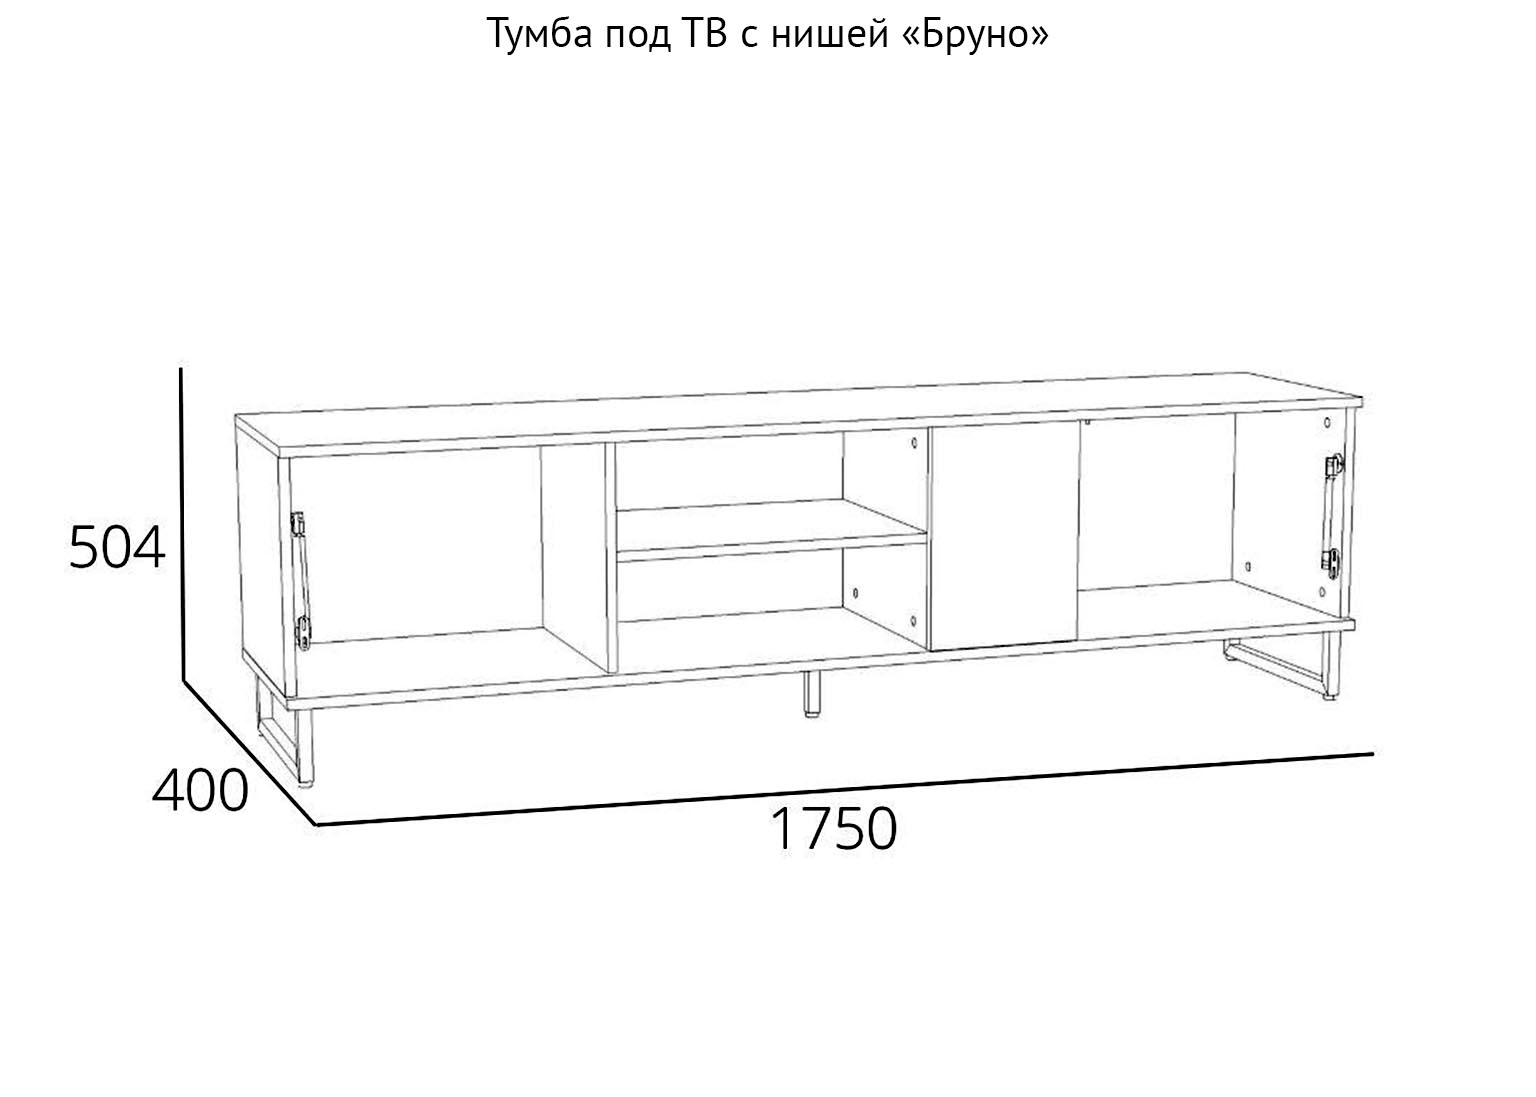 НМ 014.46 Тумба под ТВ с нишей Бруно схема Парк Мебели Краснодар